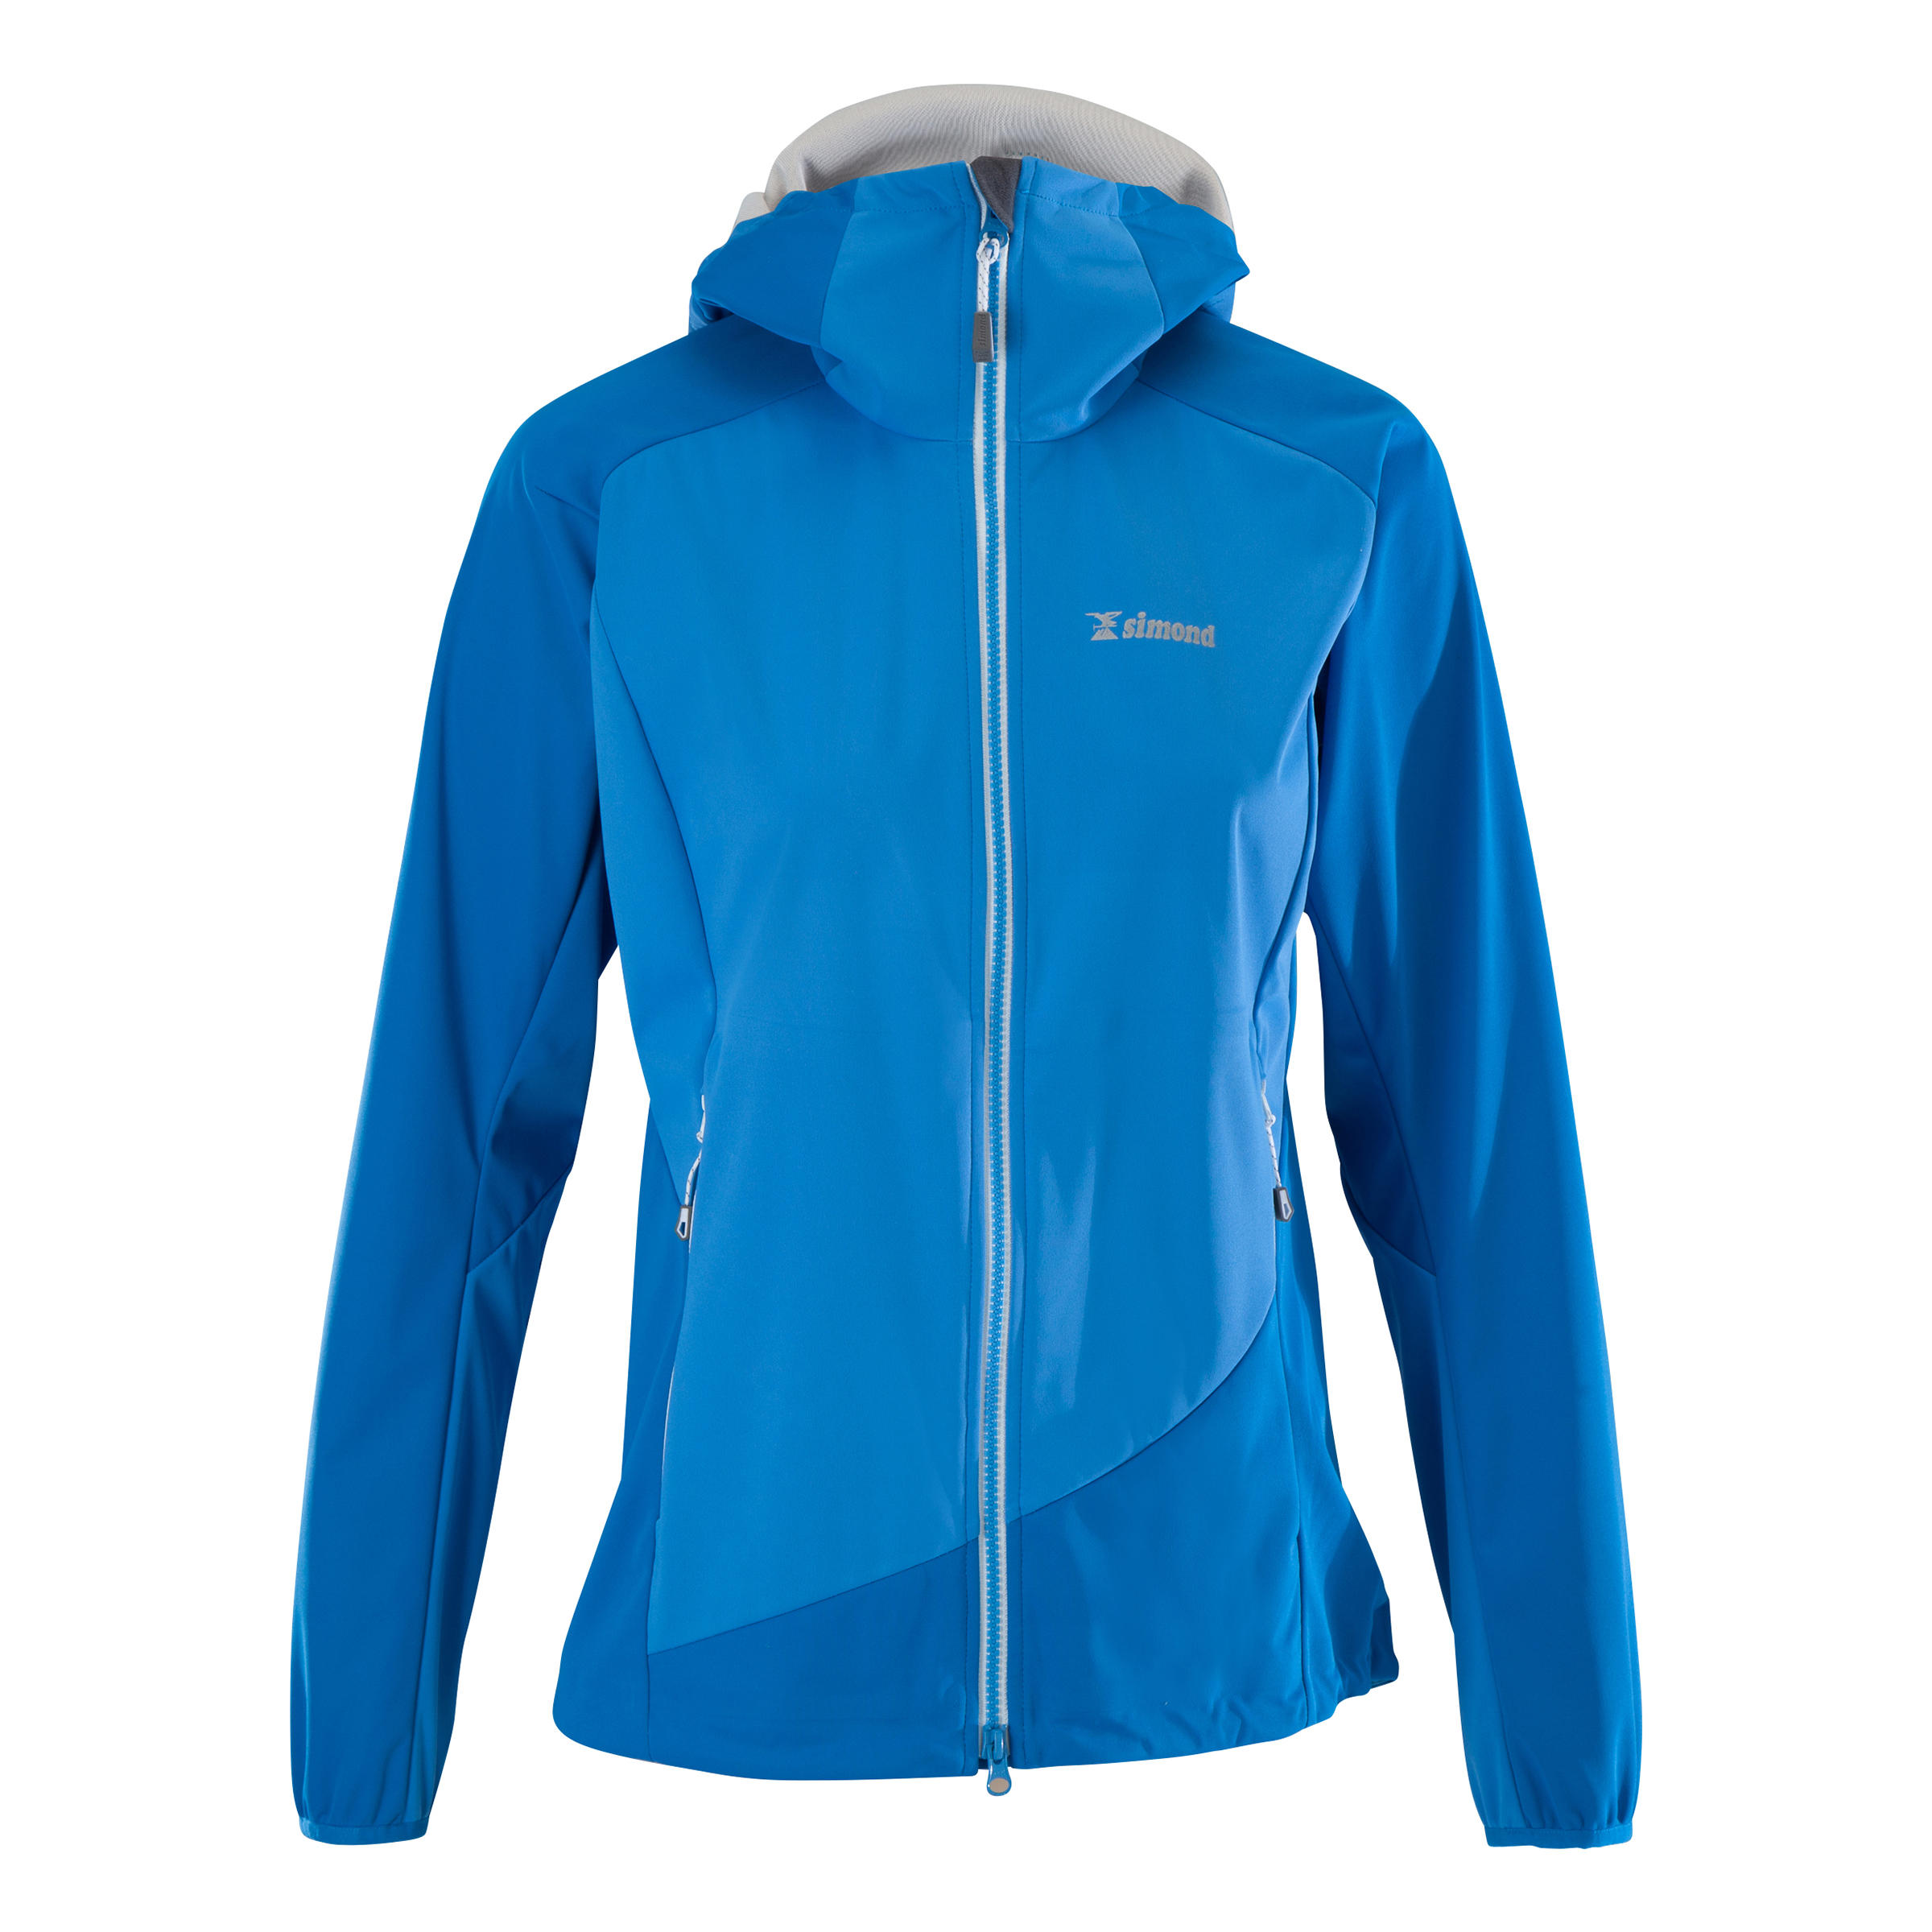 Women's Mountaineering Softshell Jacket - Alpinism Light Blue 2/11